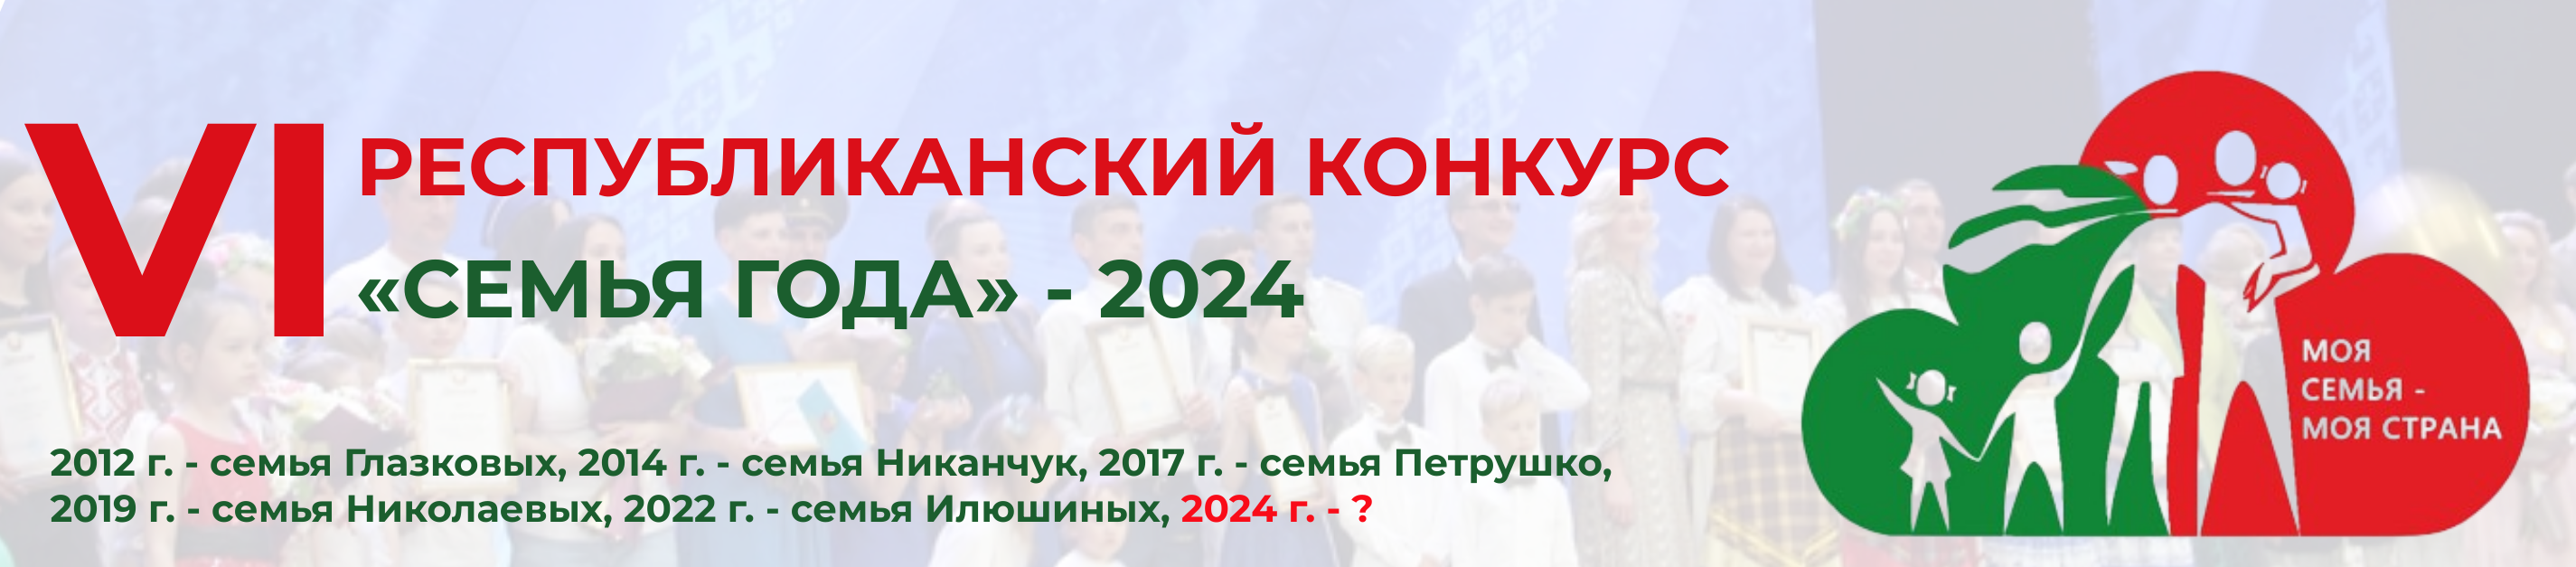 Конкурс "Семья года" 2024